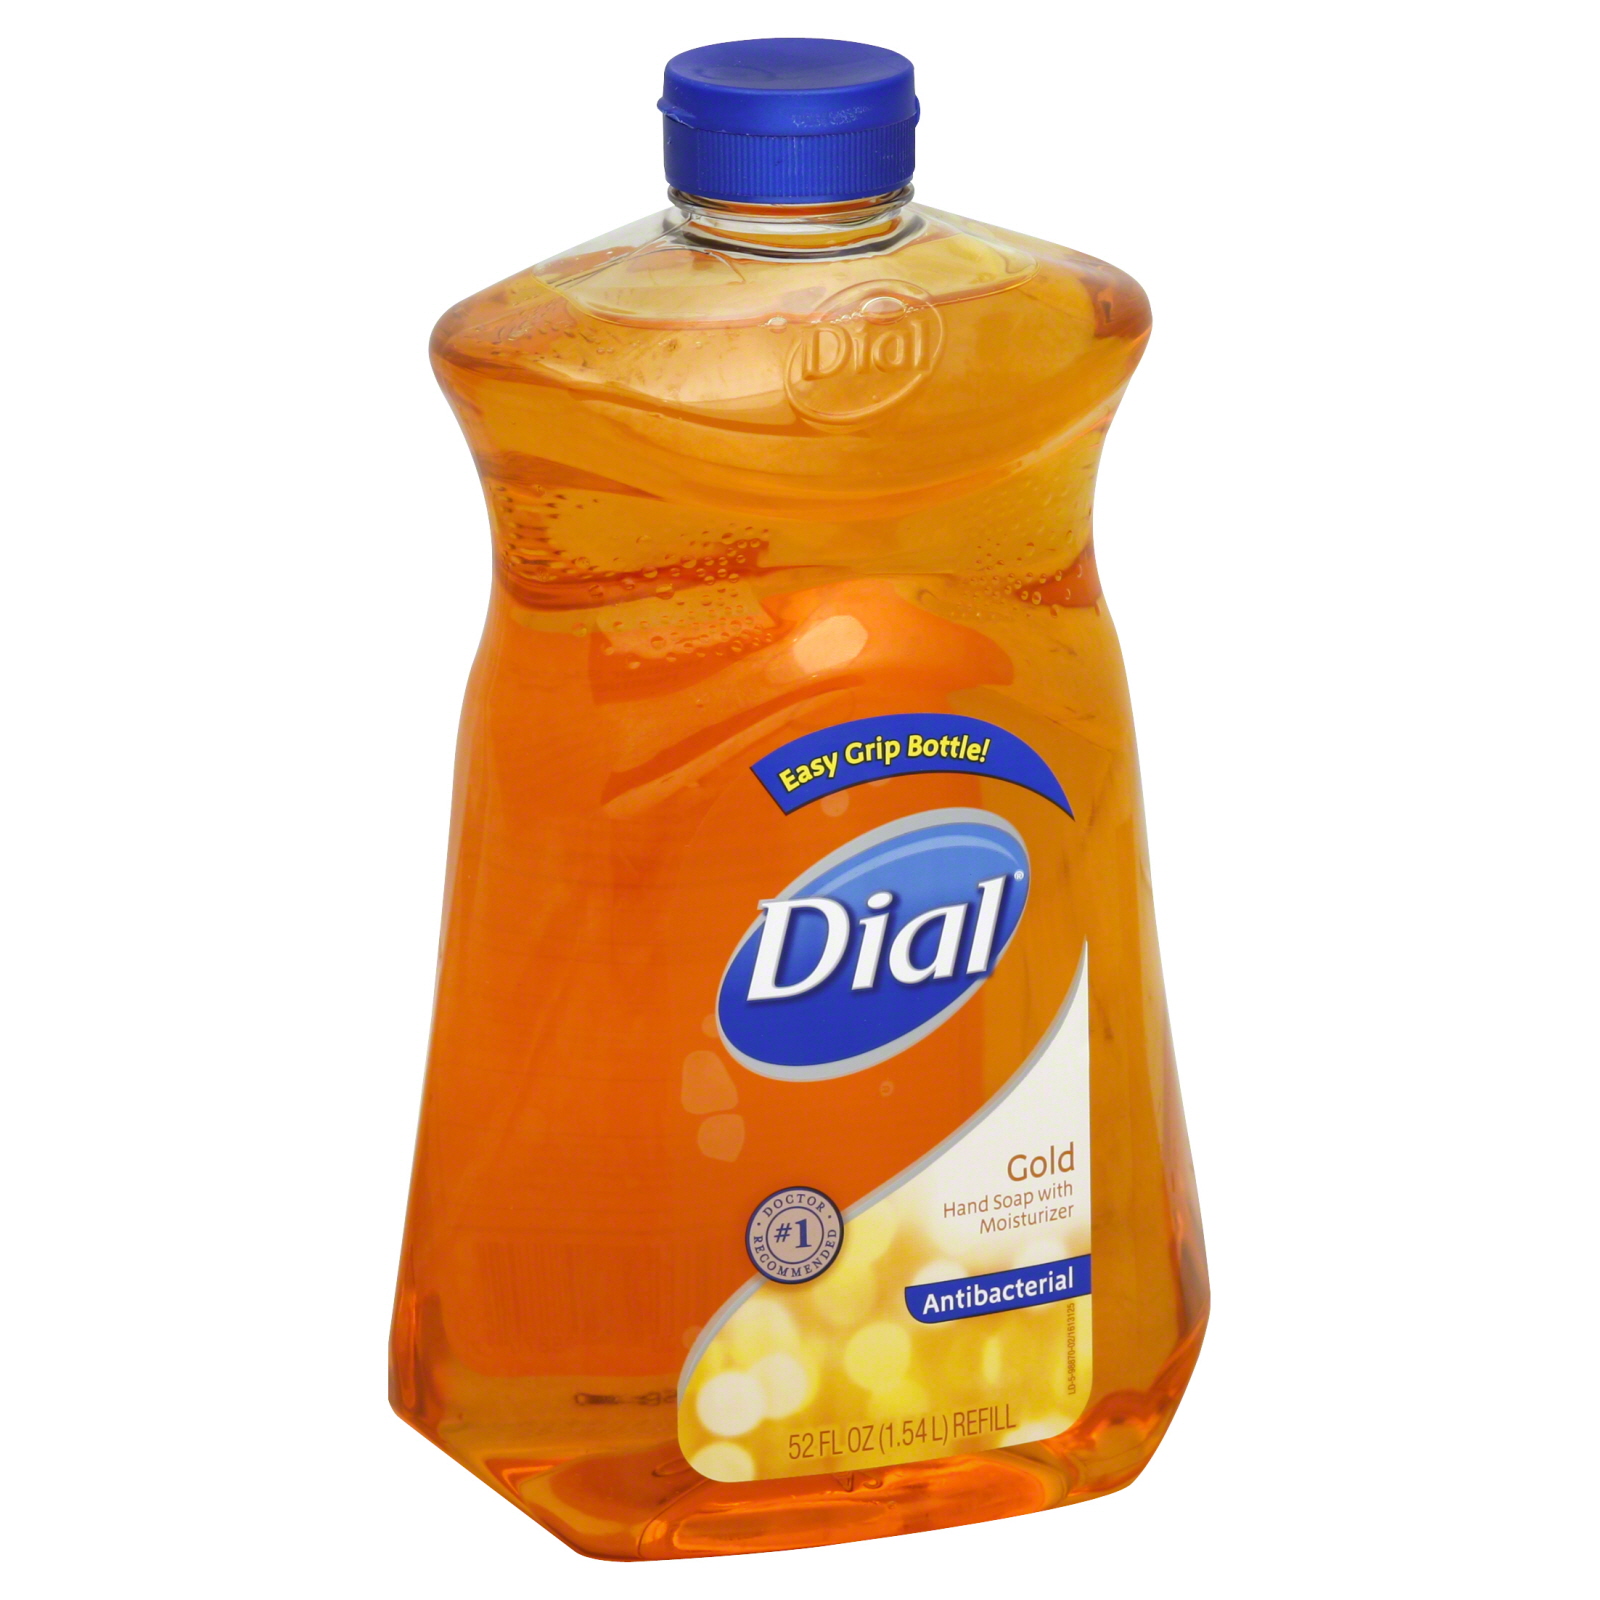 Dial Hand Soap, Antibacterial, Gold, Refill 52 fl oz (1.54 lt)